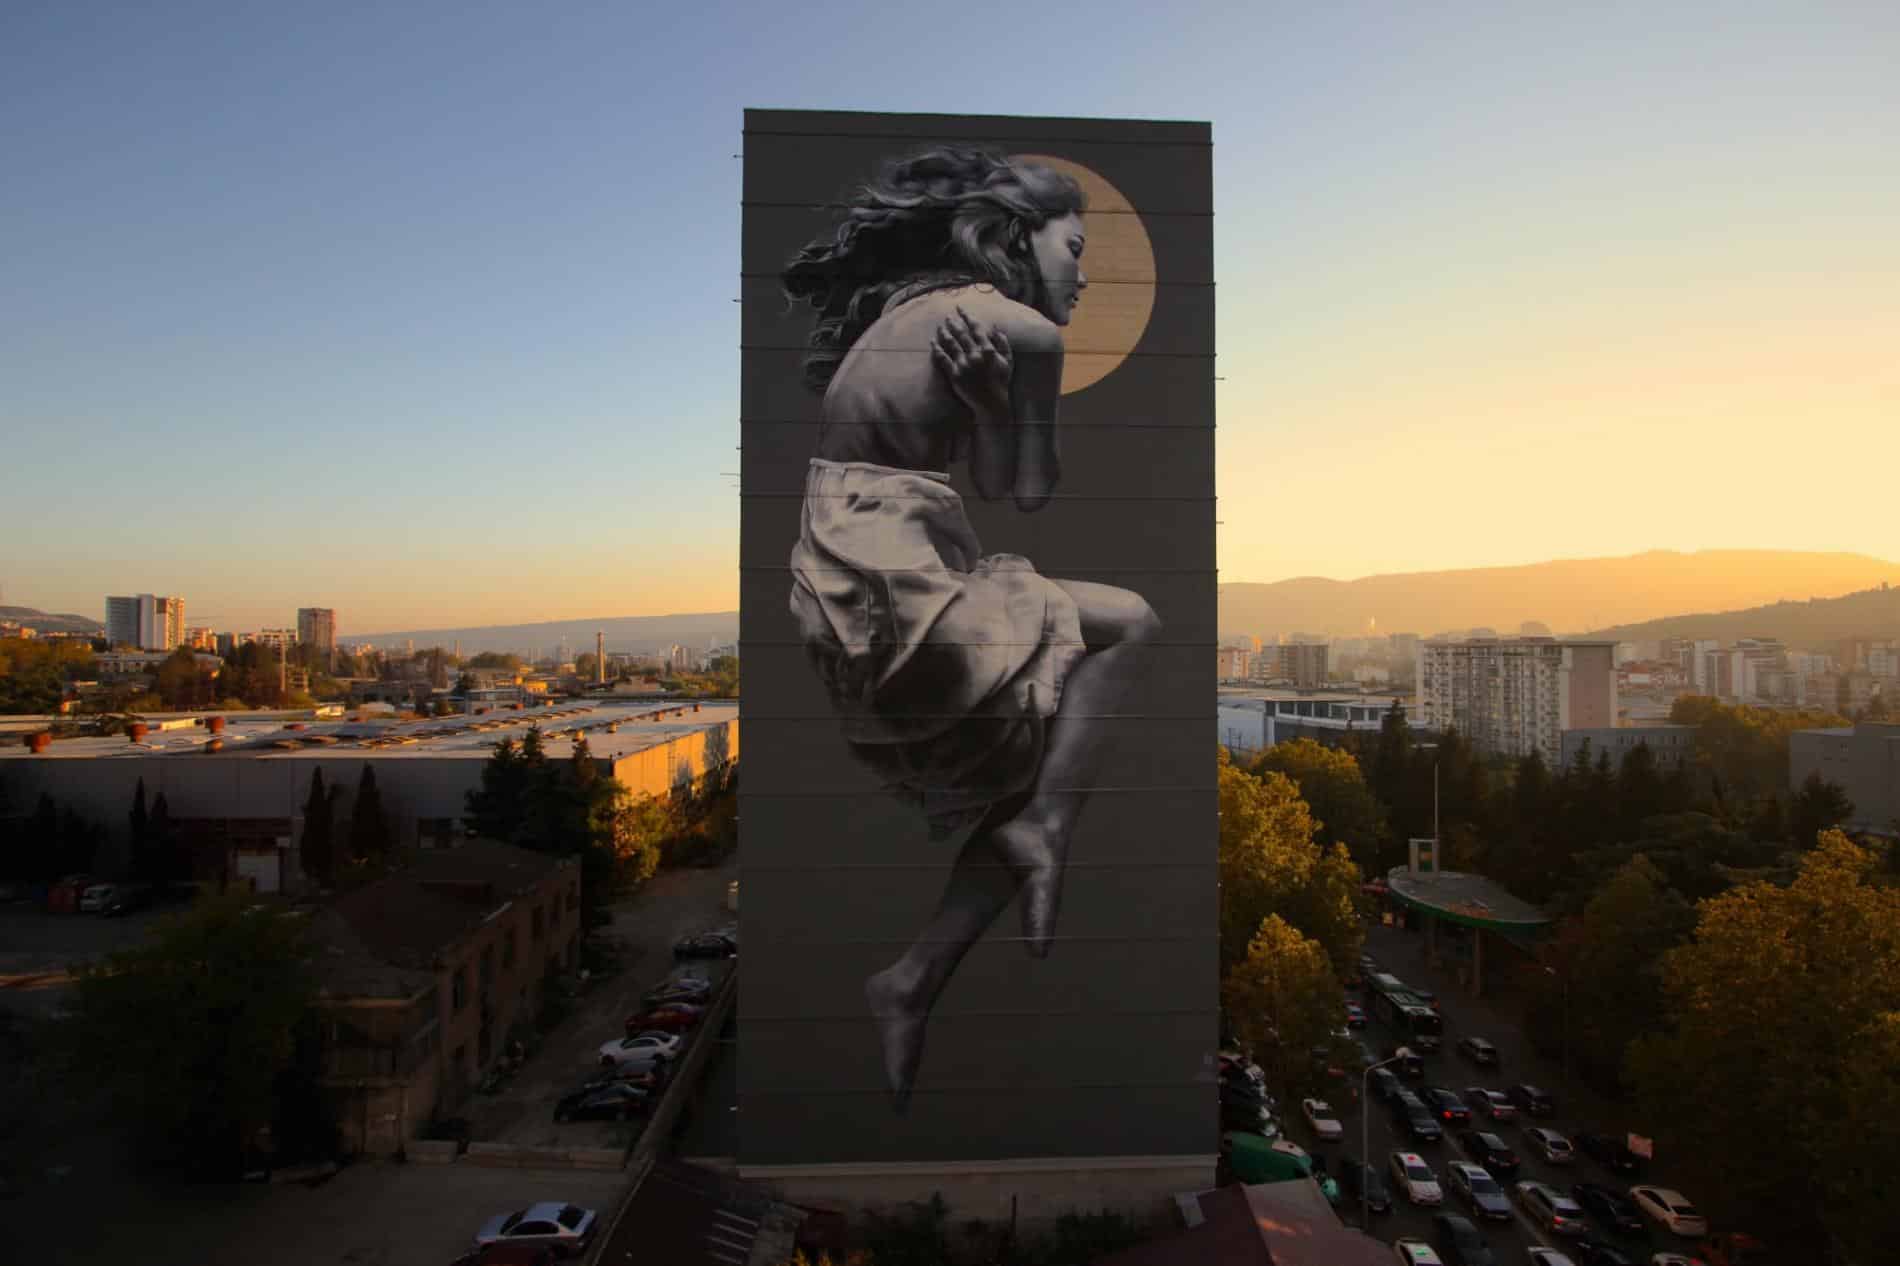 tbilisi mural fest gran mural de mujer en un gran edificio por JDL